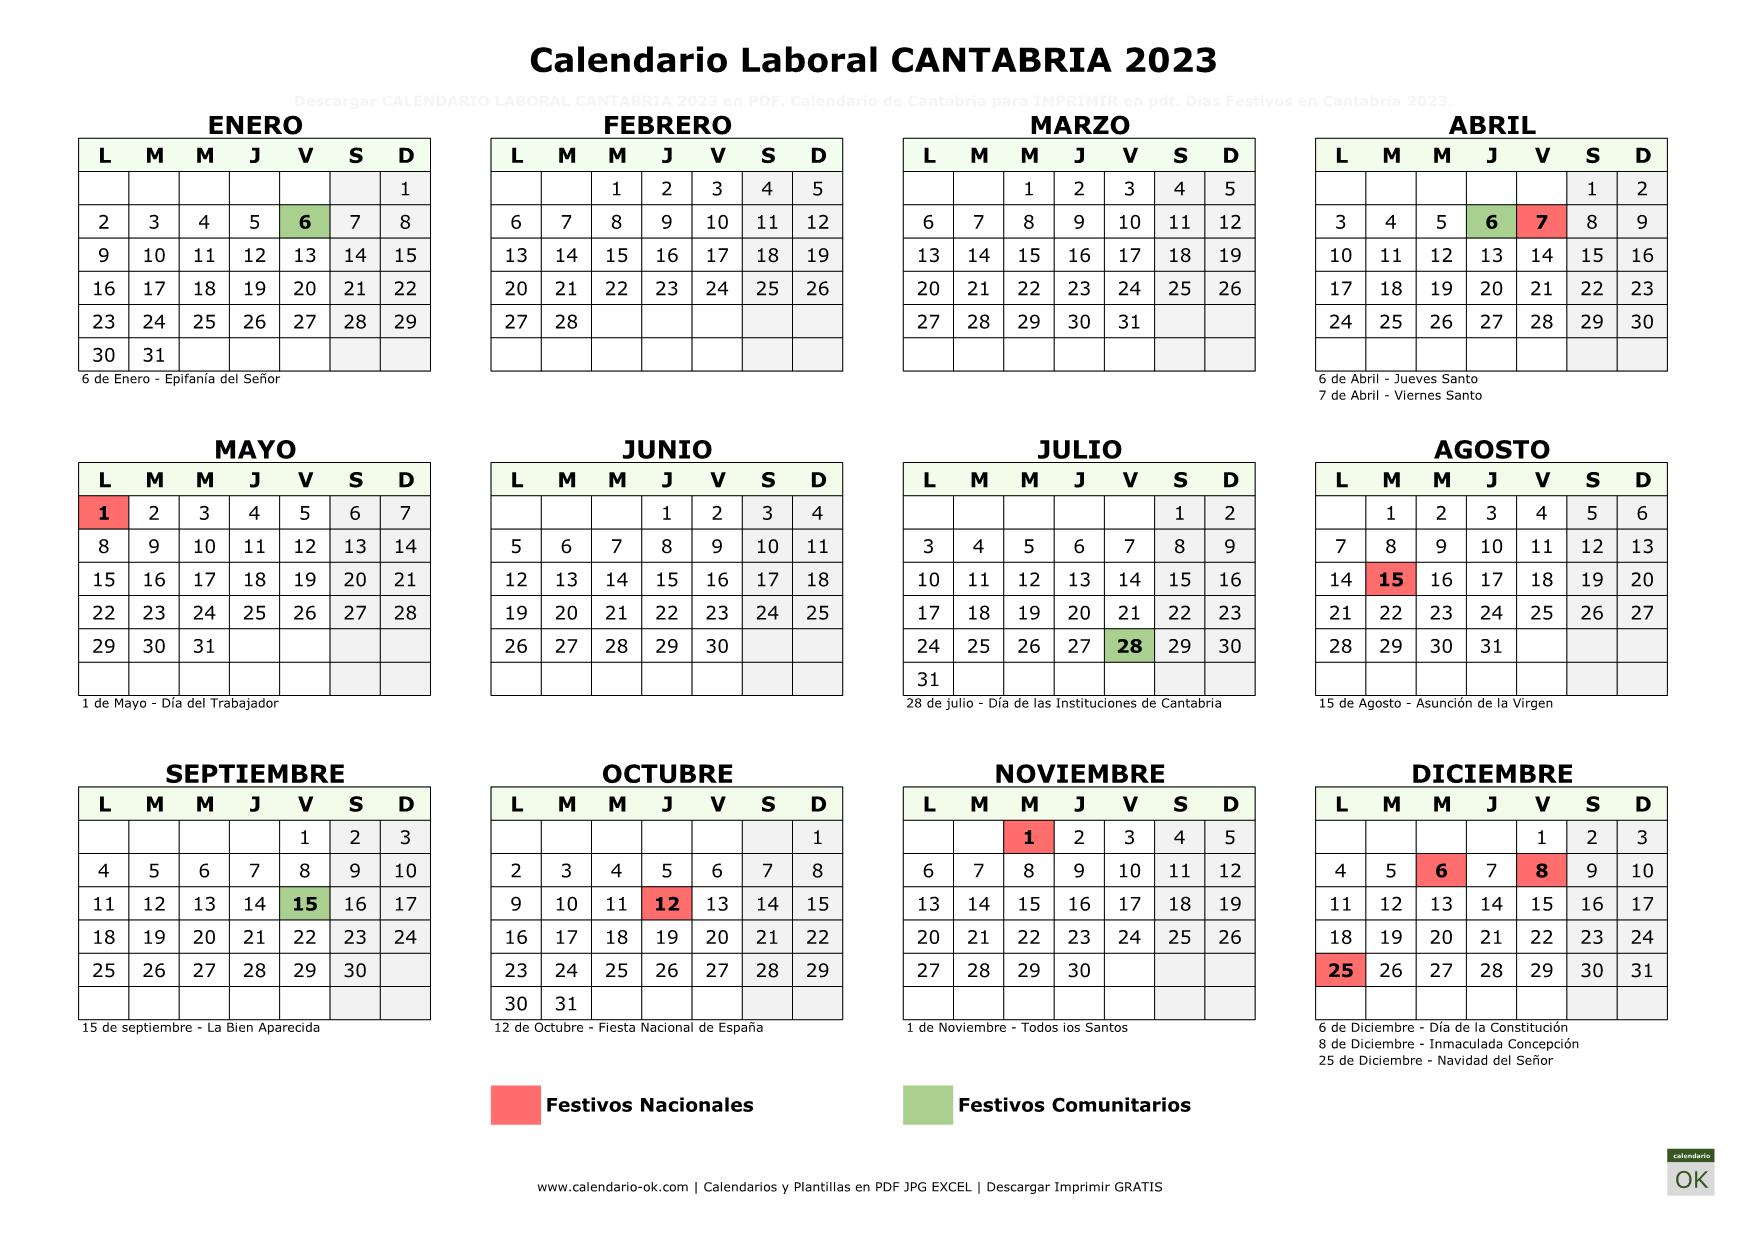 Calendario Laboral CANTABRIA 2023 horizontal